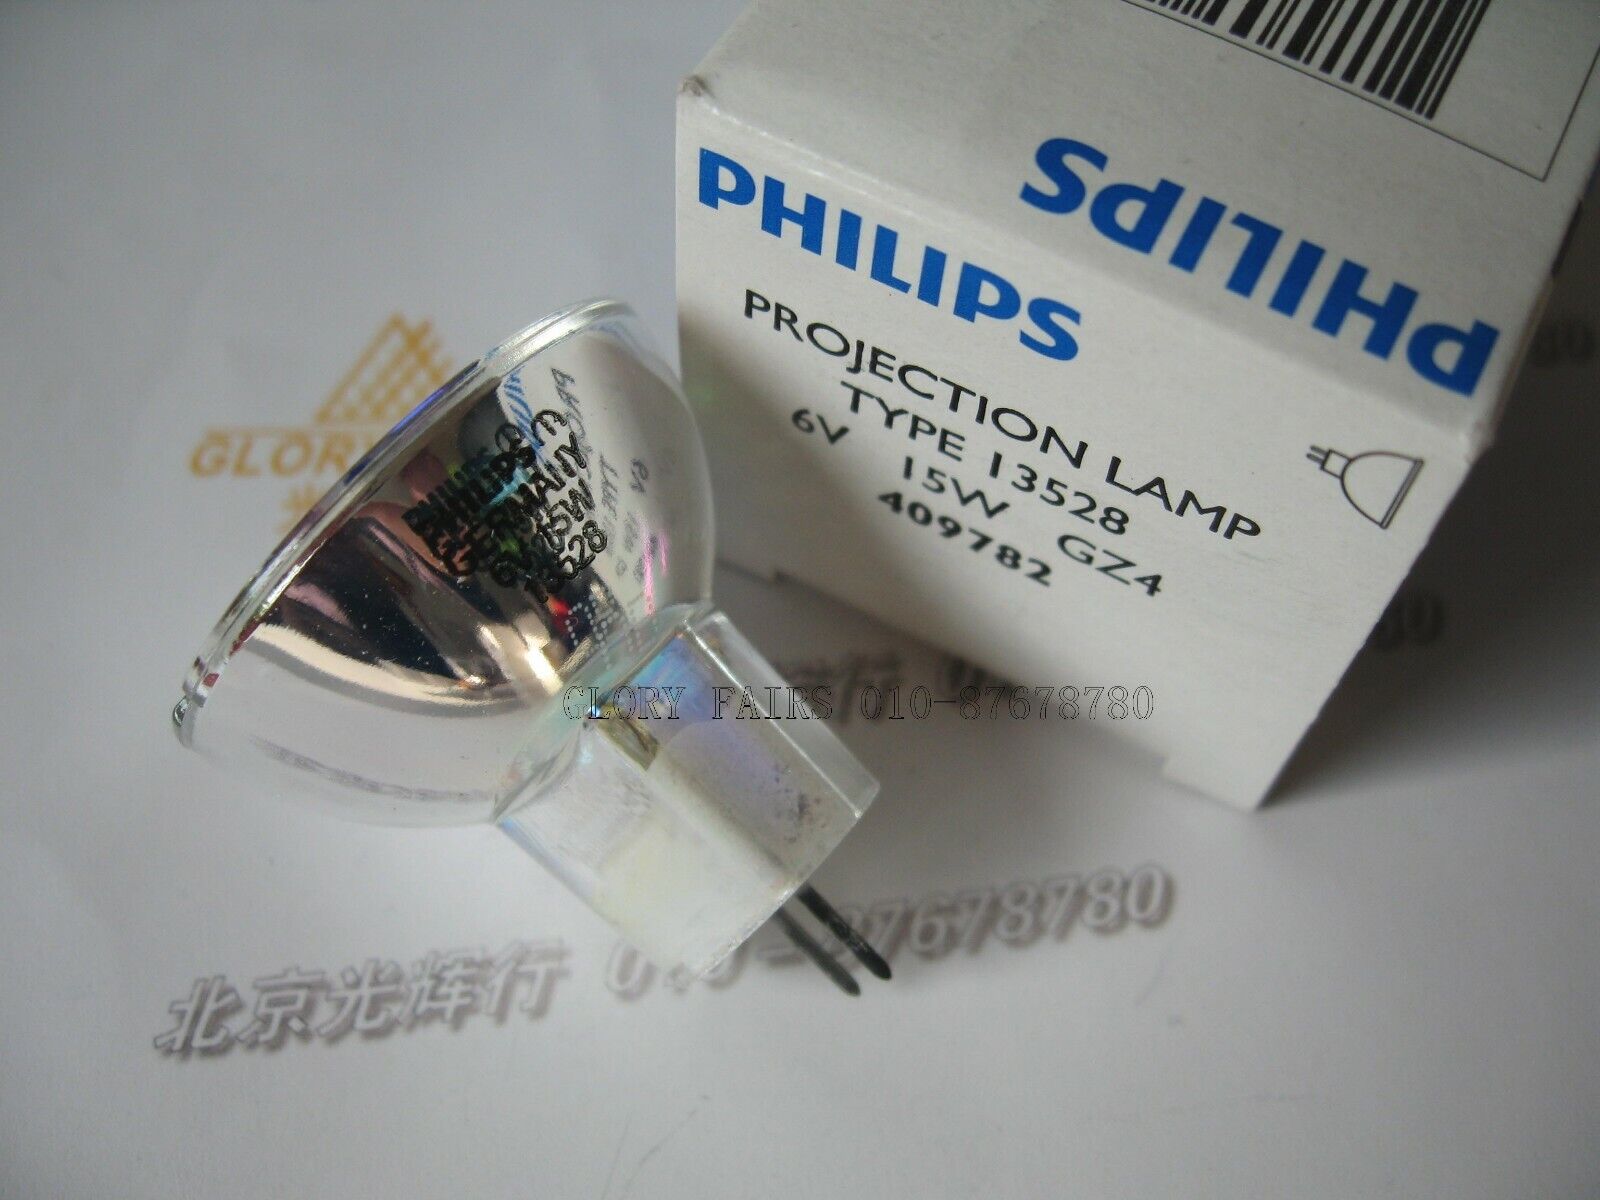 Philips 13528 6V 15W GZ4 409782 projection lamp,6V15W microscope halogen bulb